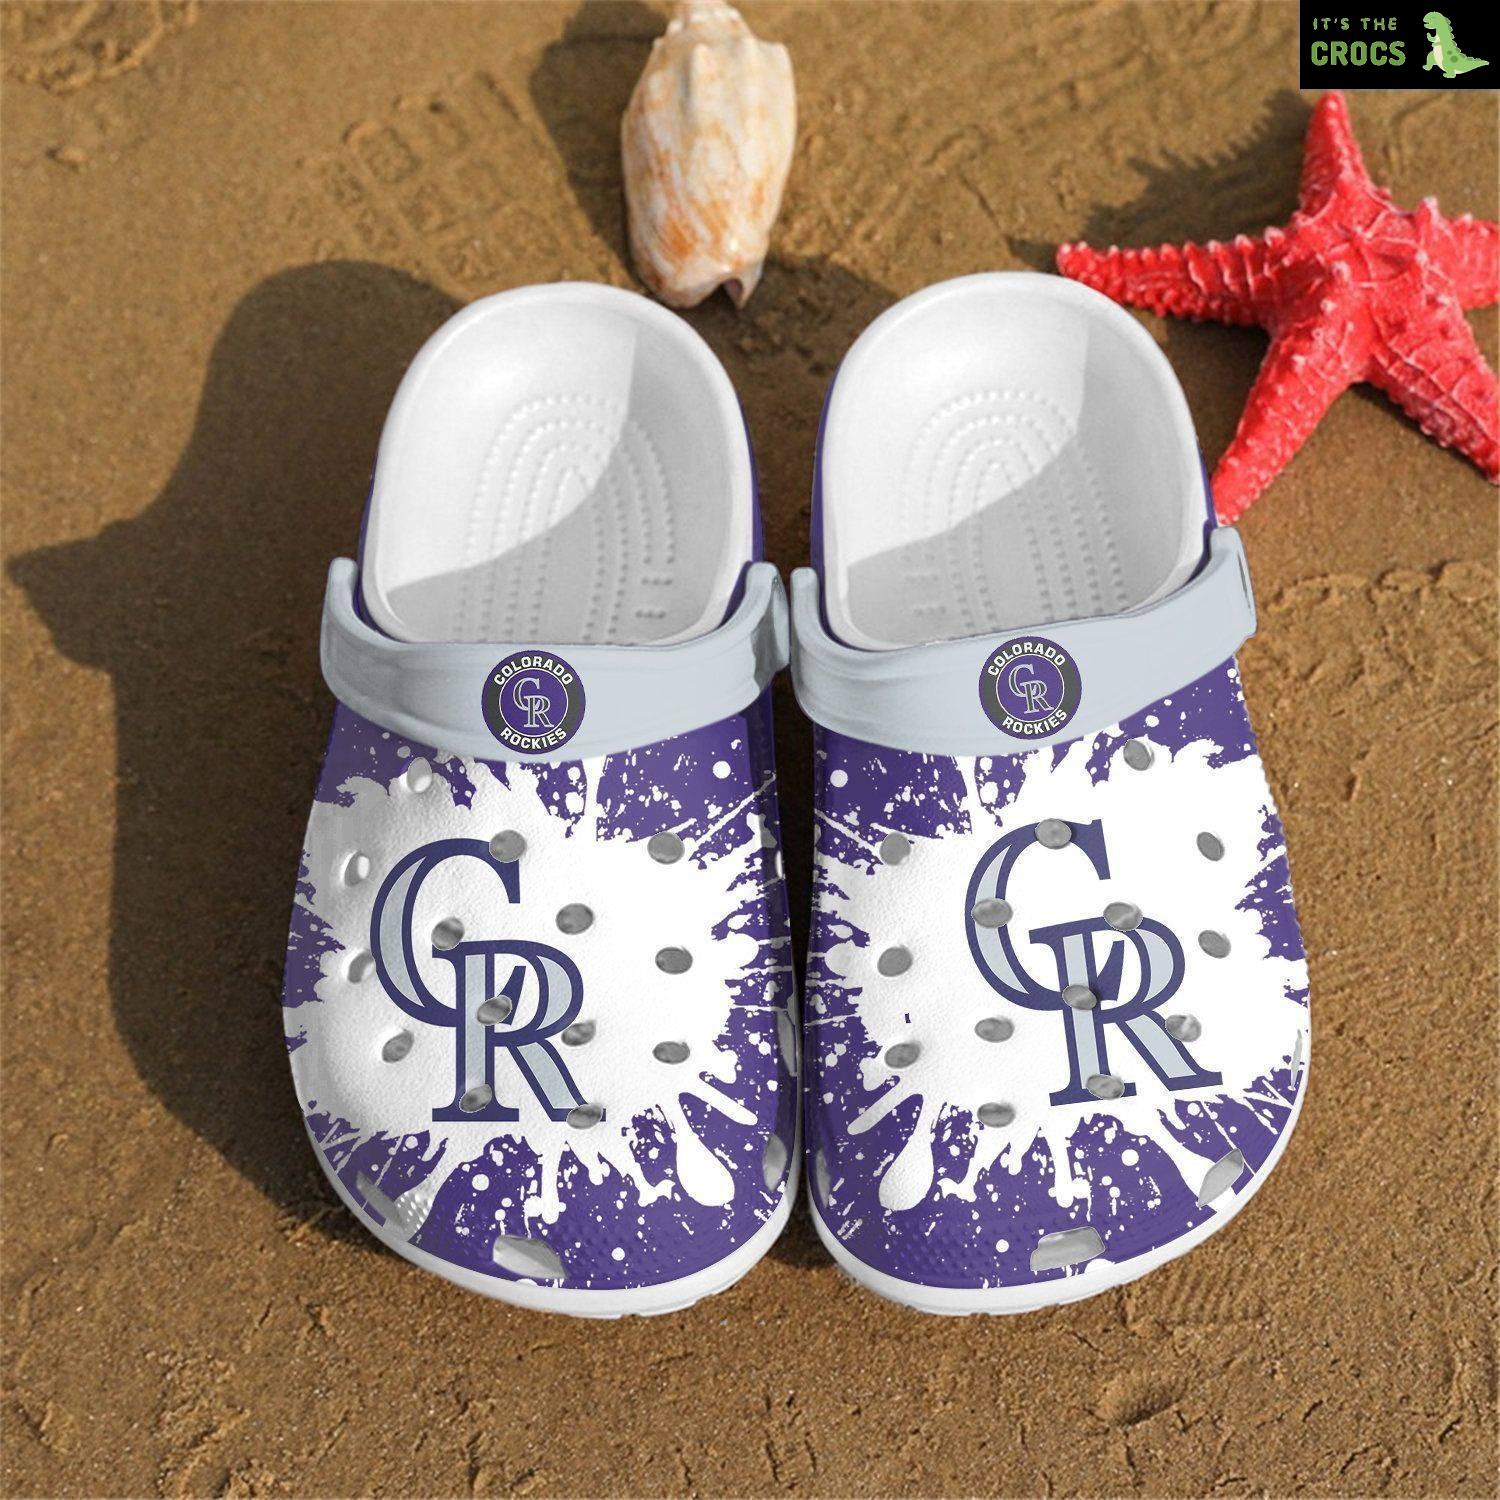 Colorado Rockies Mlb Gift For Fan 6 Crocs Clog Shoescrocband Clogs Comfy Footwe